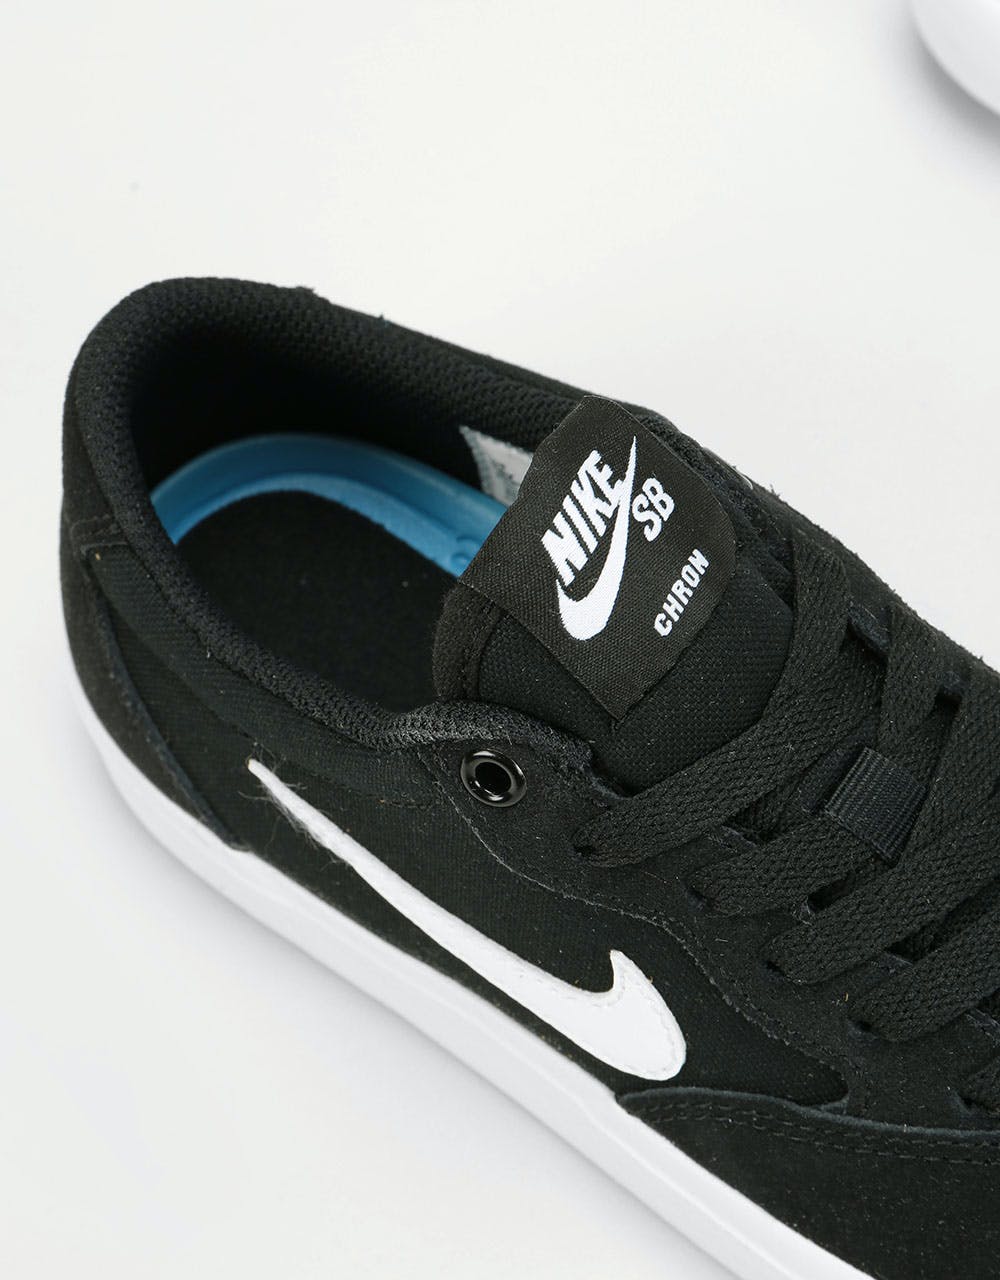 Nike SB Chron Kids Skate Shoes - Black/White